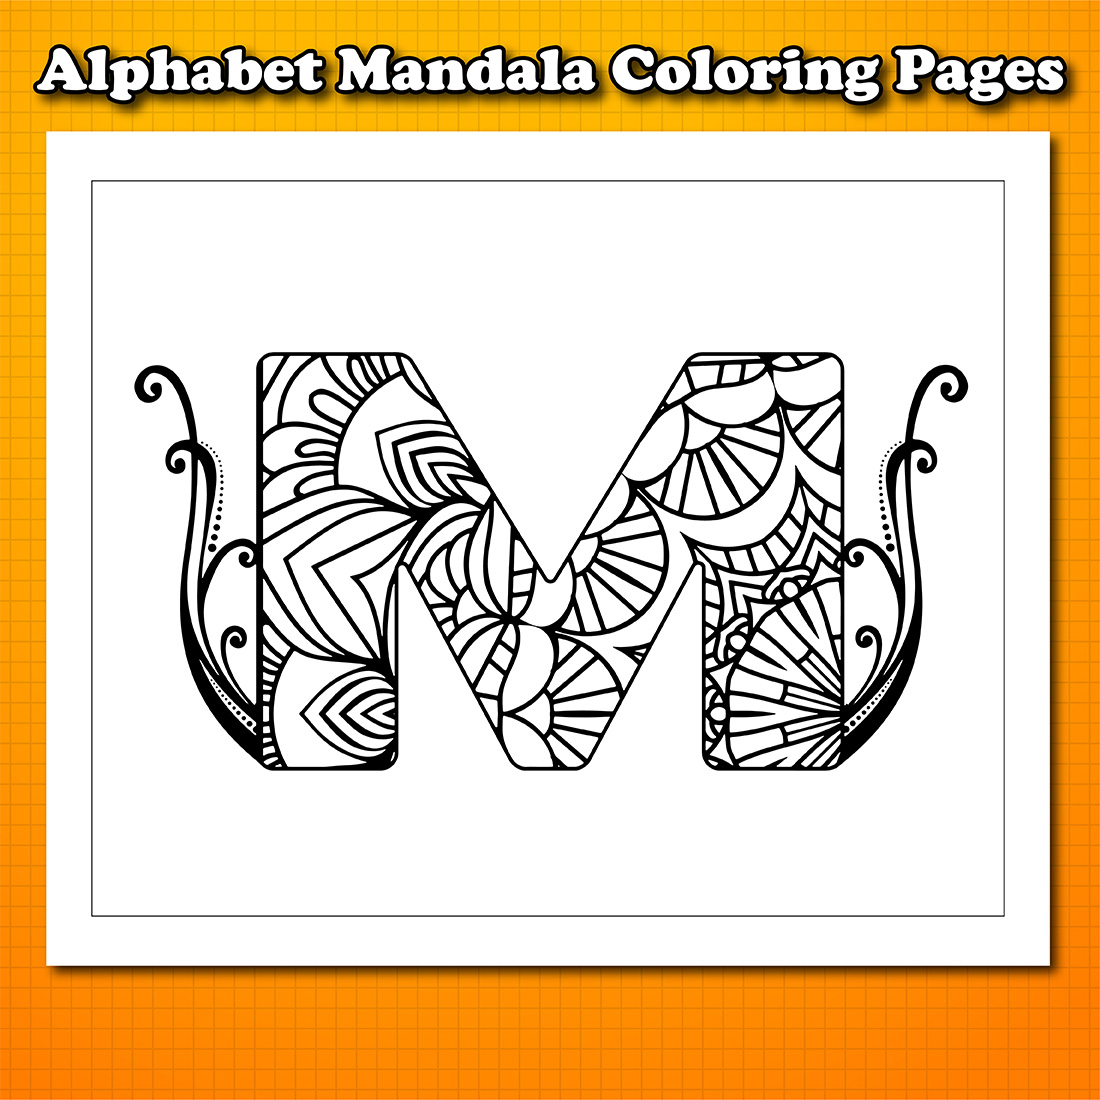 preview image Alphabet Mandala Coloring Pages.